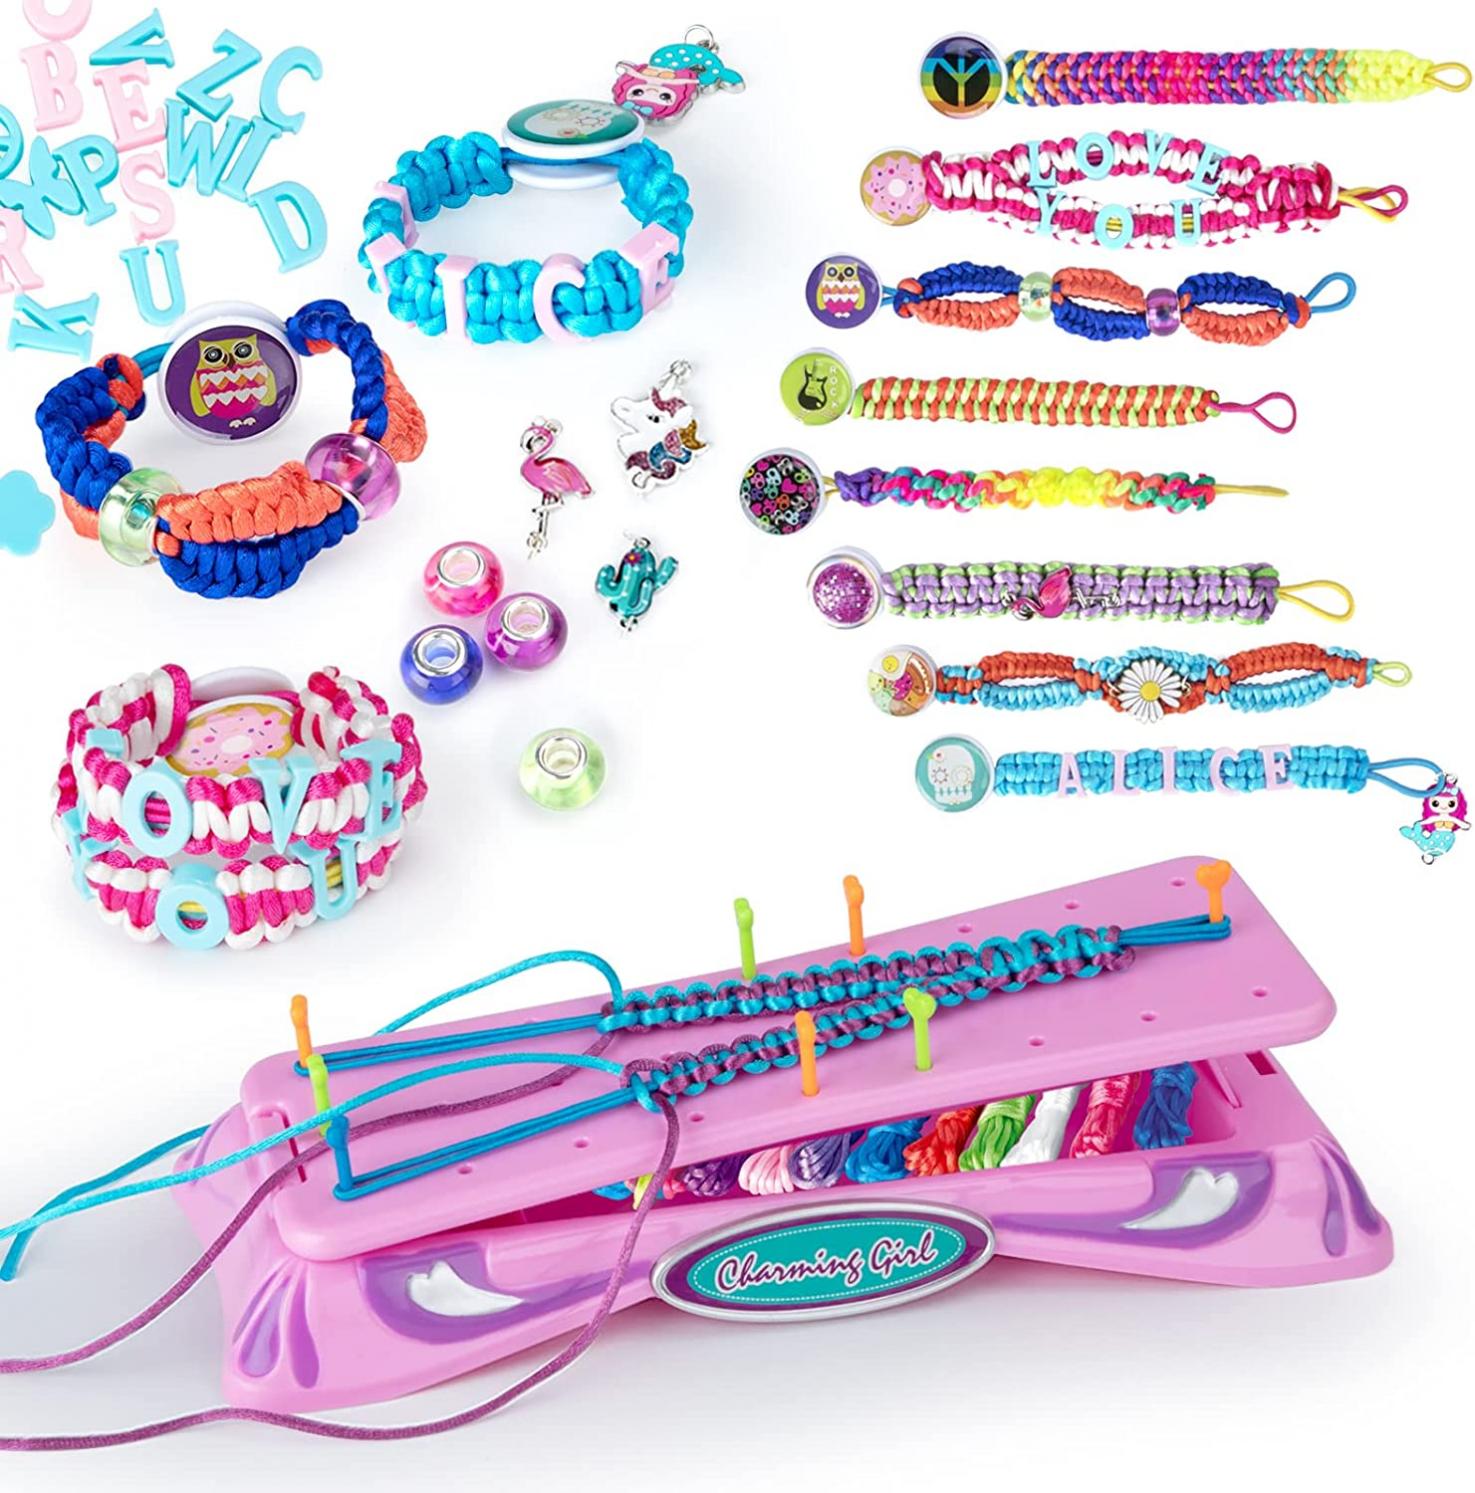 Girls Crafts Friendship Bracelet String Kit,Crafts Beaded Bracelets Making Toys for Girl,Jewelry Making Loom Bracelet Maker Kit for 6 7 8 9 10 11 12 Years Old,Birthday Christmas Gifts for Teen Girls